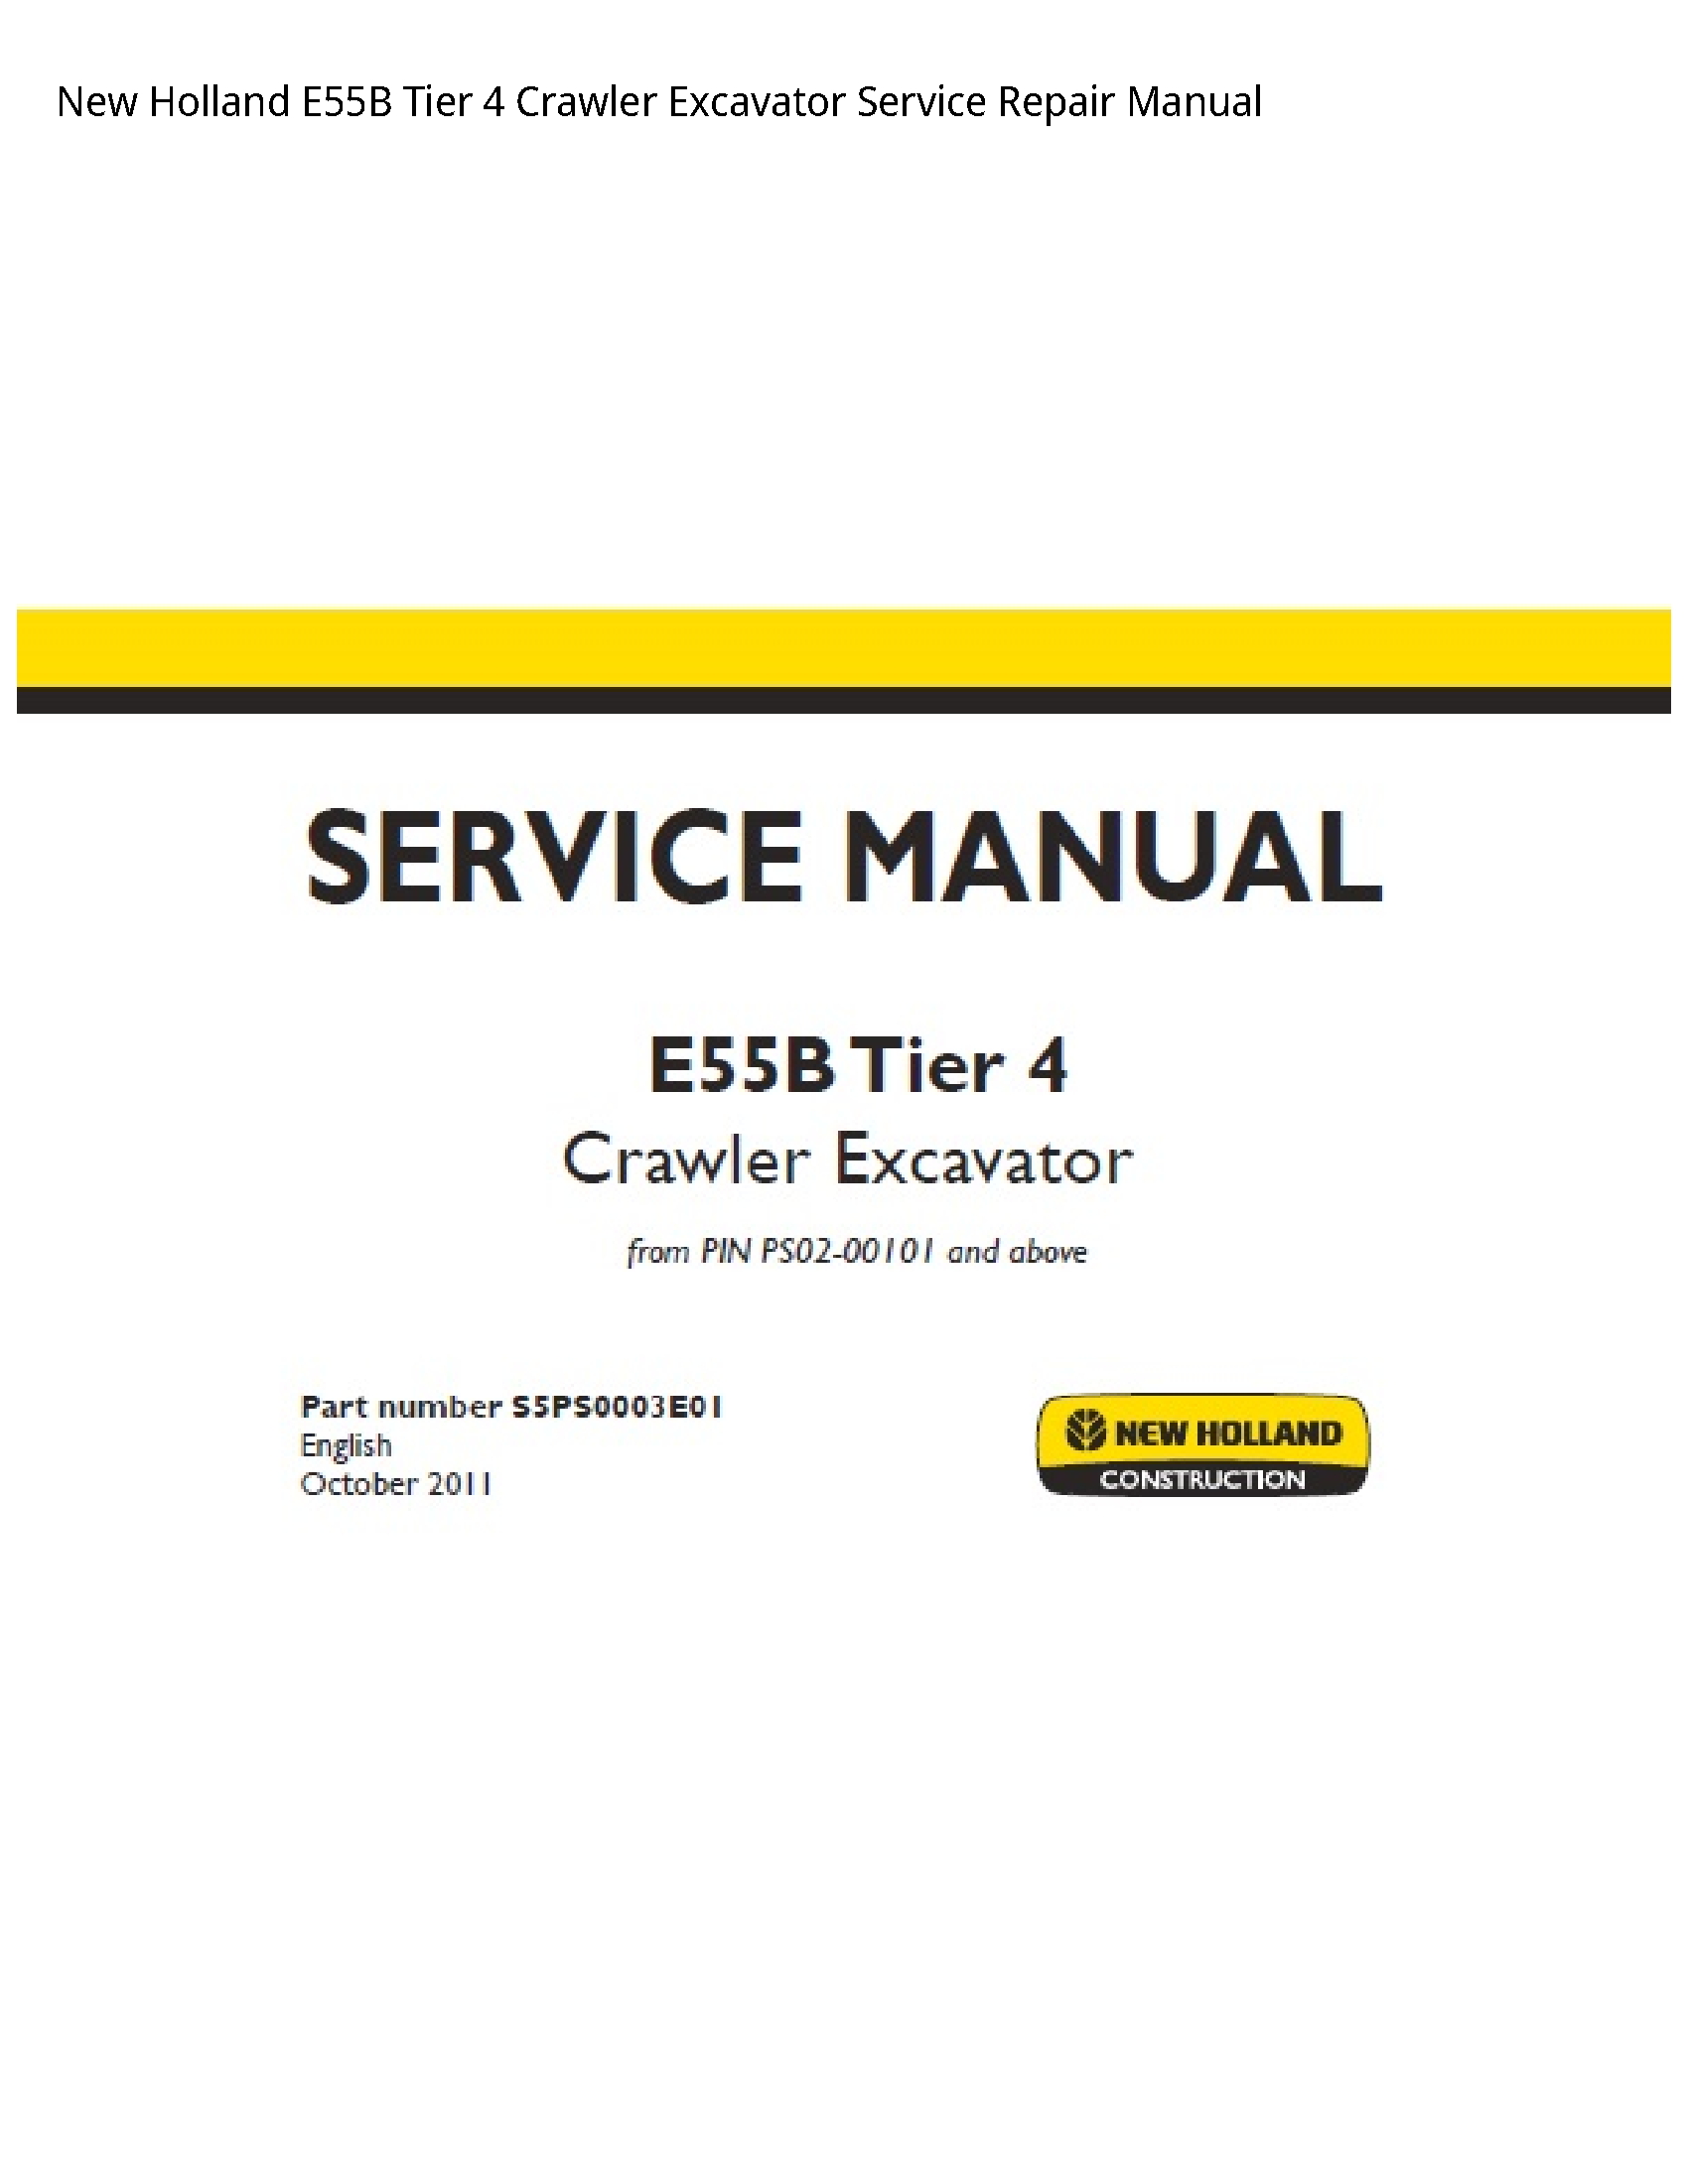 New Holland E55B Tier Crawler Excavator manual